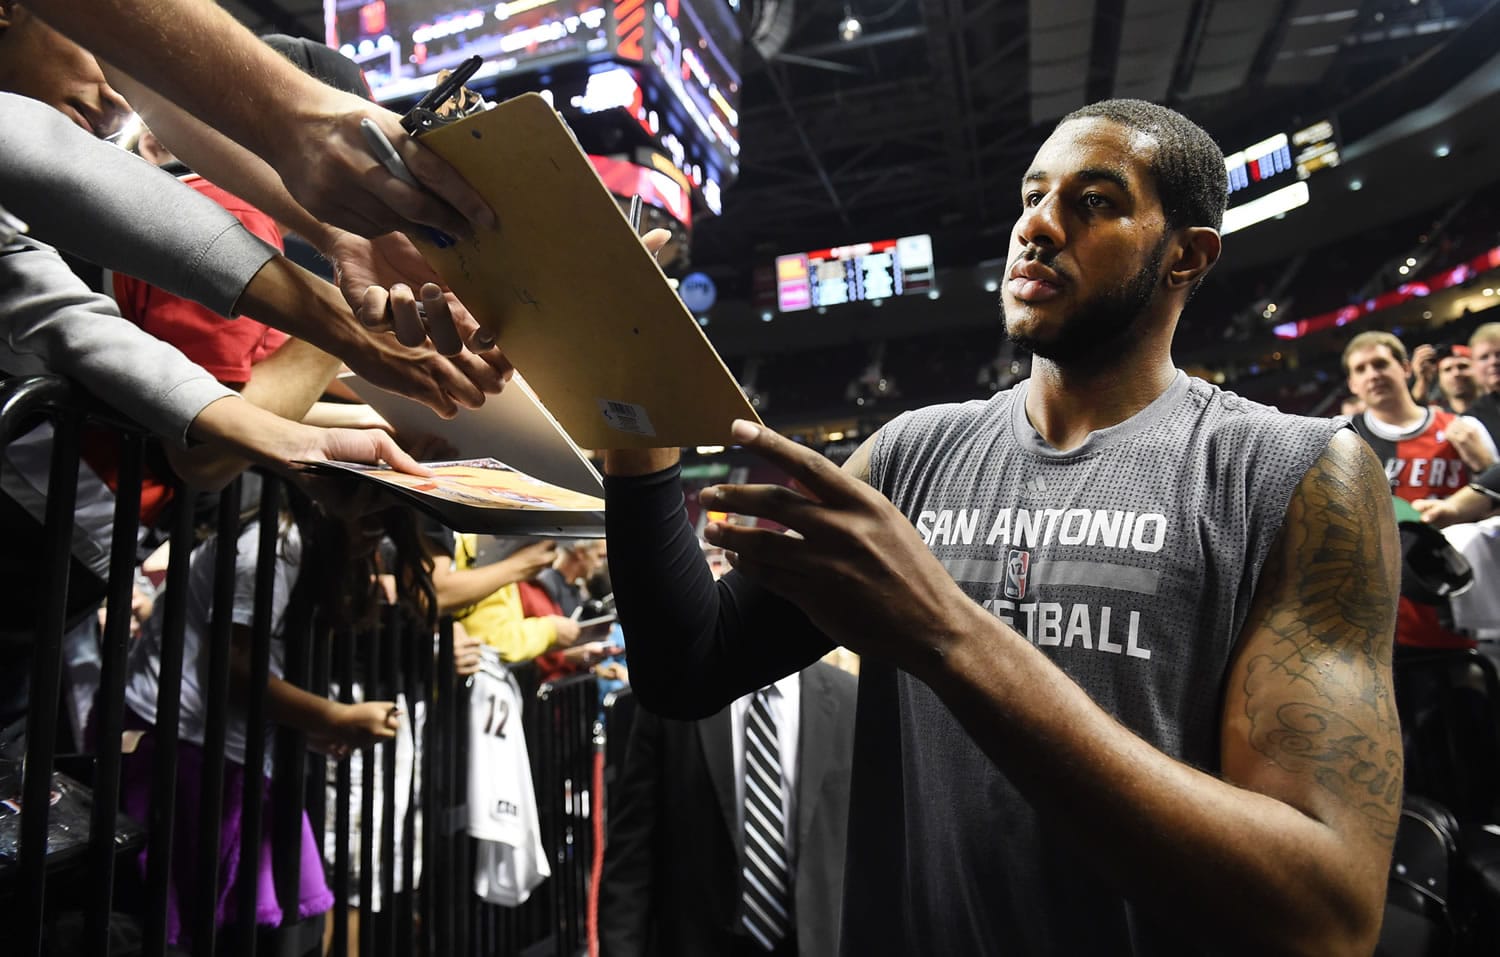 San Antonio Spurs forward LaMarcus Aldridge signs autographs before an NBA basketball game against the Portland Trail Blazers in Portland, Ore., Wednesday, Nov. 11, 2015.